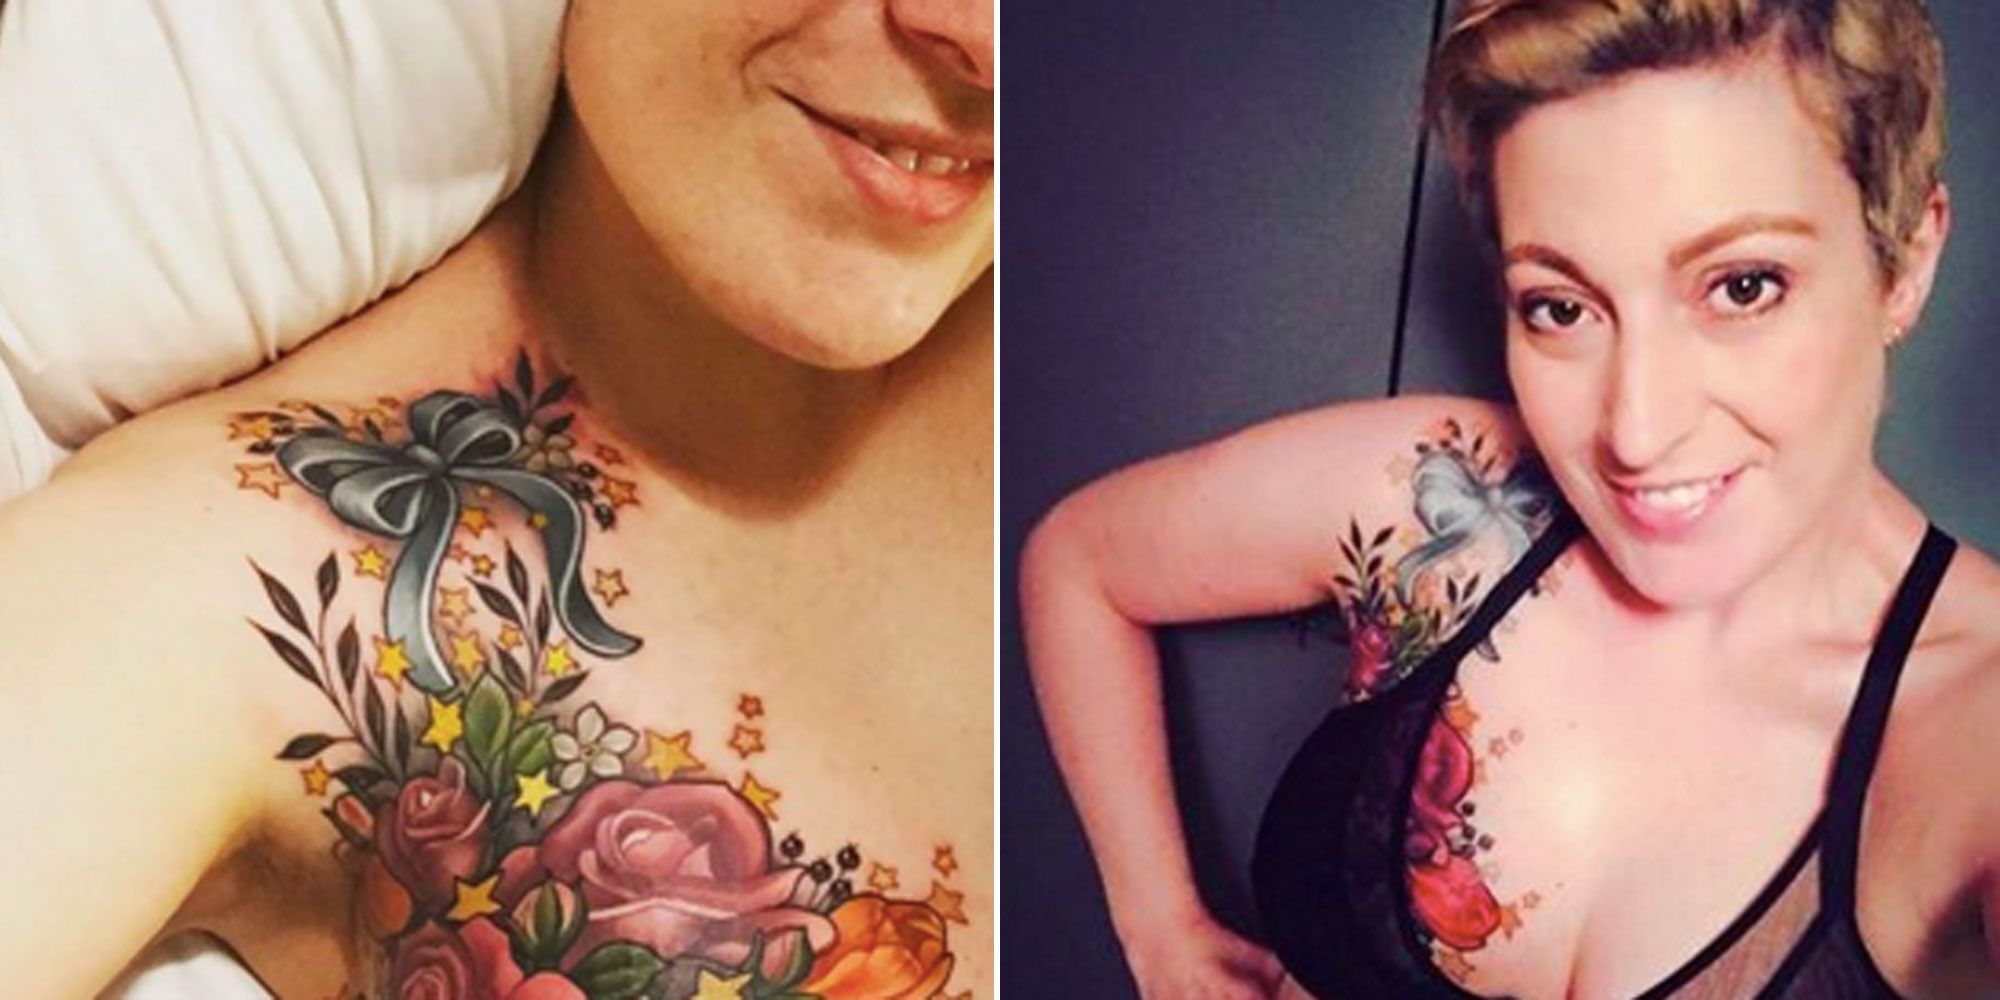 Badass Woman Blasts Her Tattooed Post-Lumpectomy Breast on the